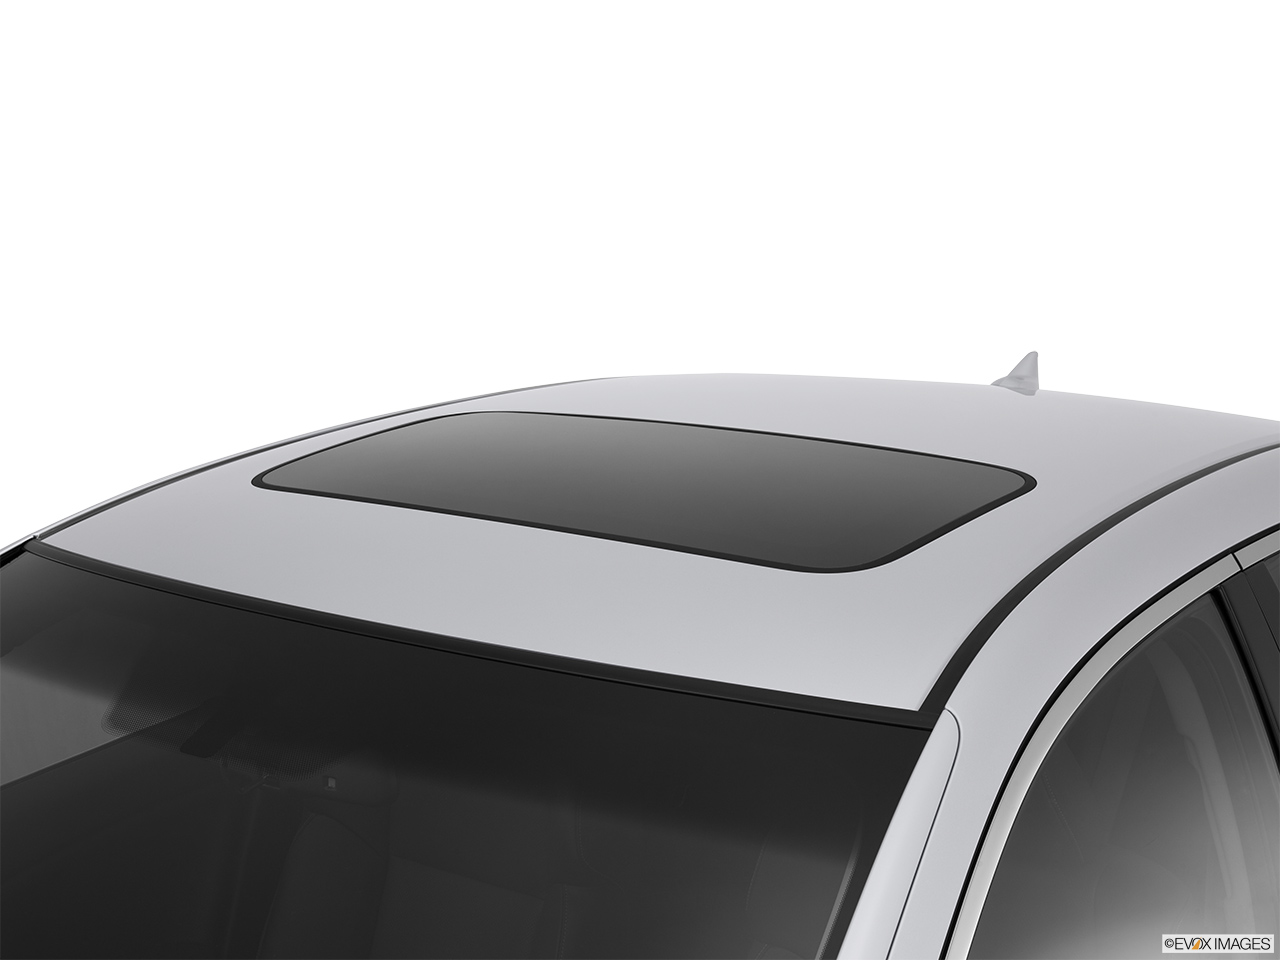 2013 Acura TSX 5-speed Automatic Sunroof/moonroof. 